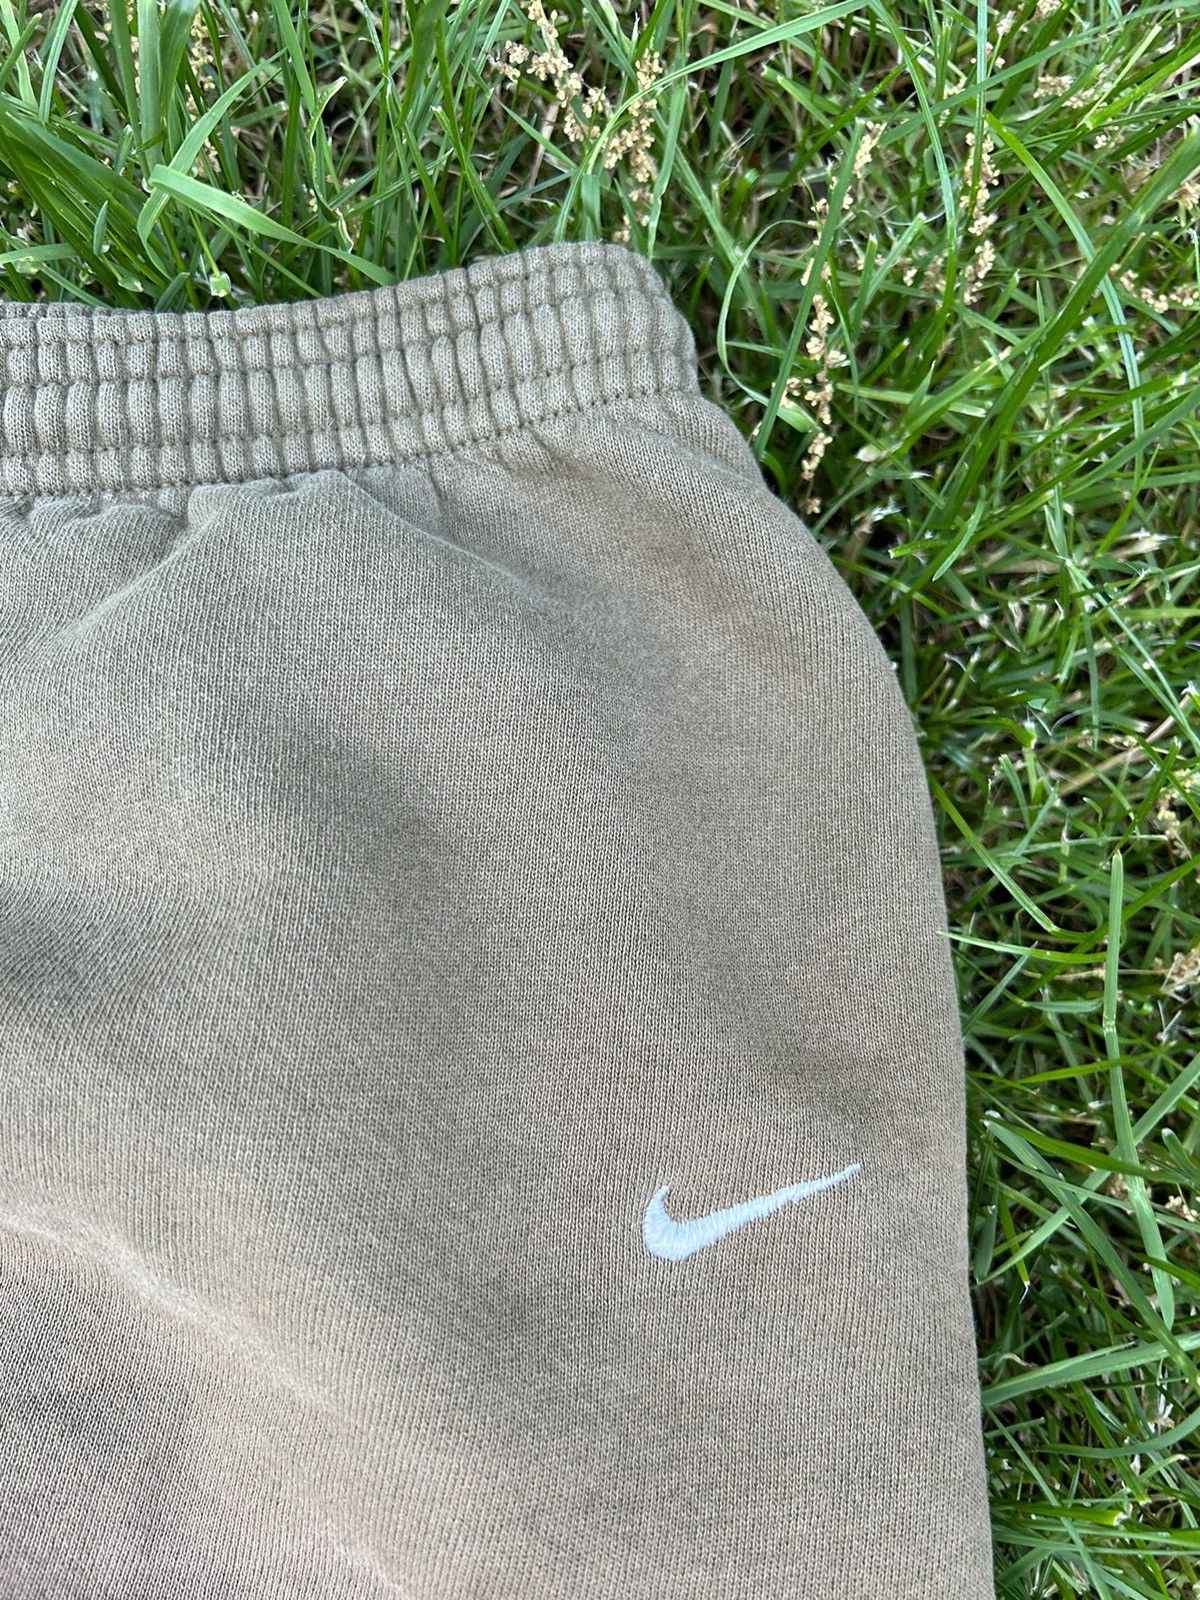 Nike Vintage Nike Sweatpants Size US 32 / EU 48 - 4 Thumbnail